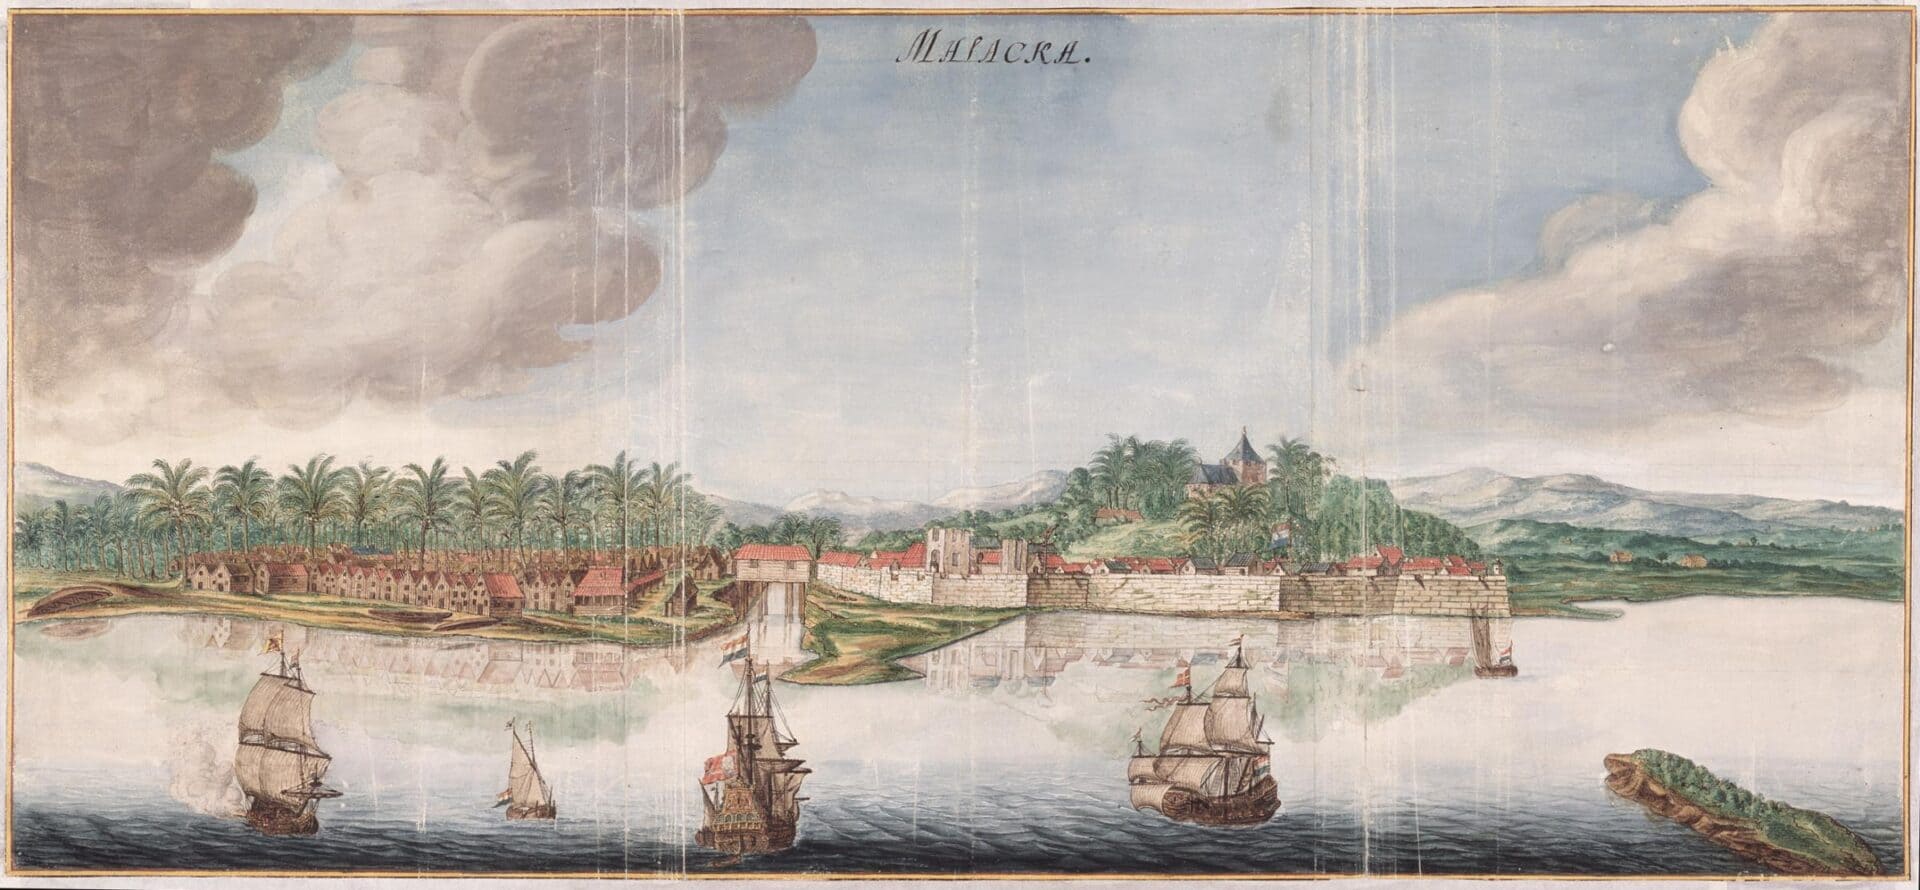 Malacca Sultanate and Colonial Era